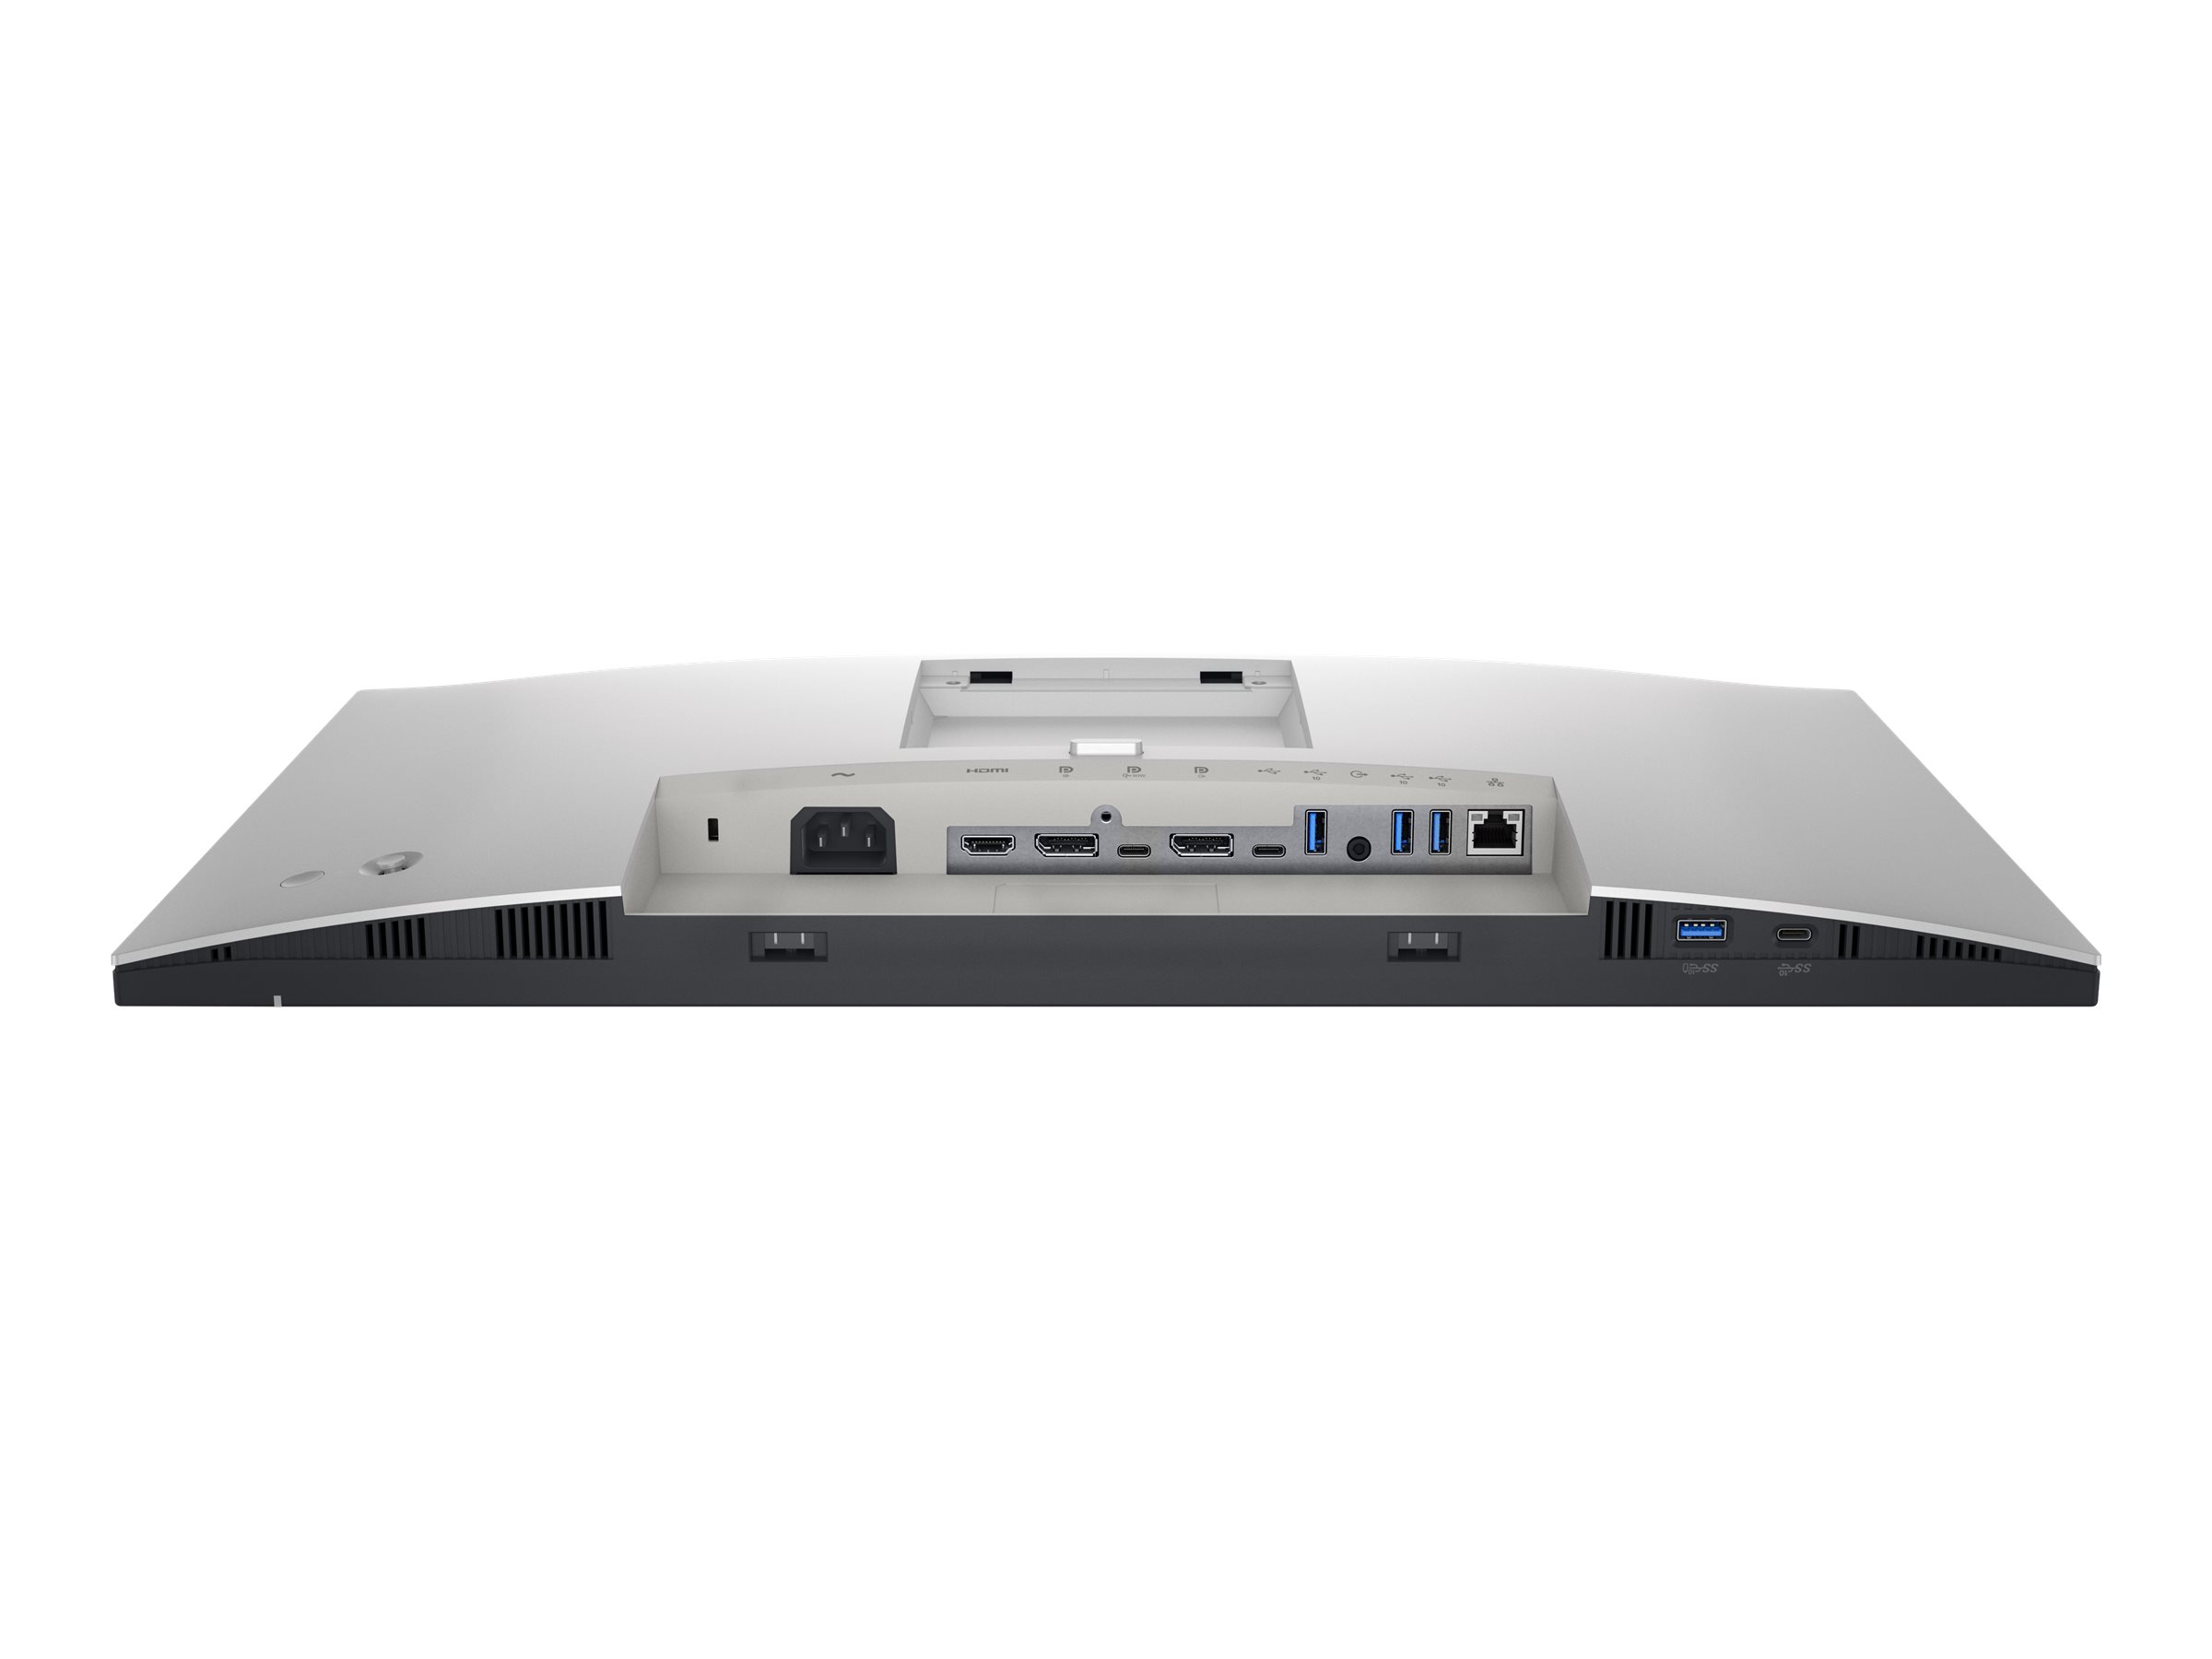 Dell UltraSharp U2422HE - LED-Monitor - 61 cm (24")